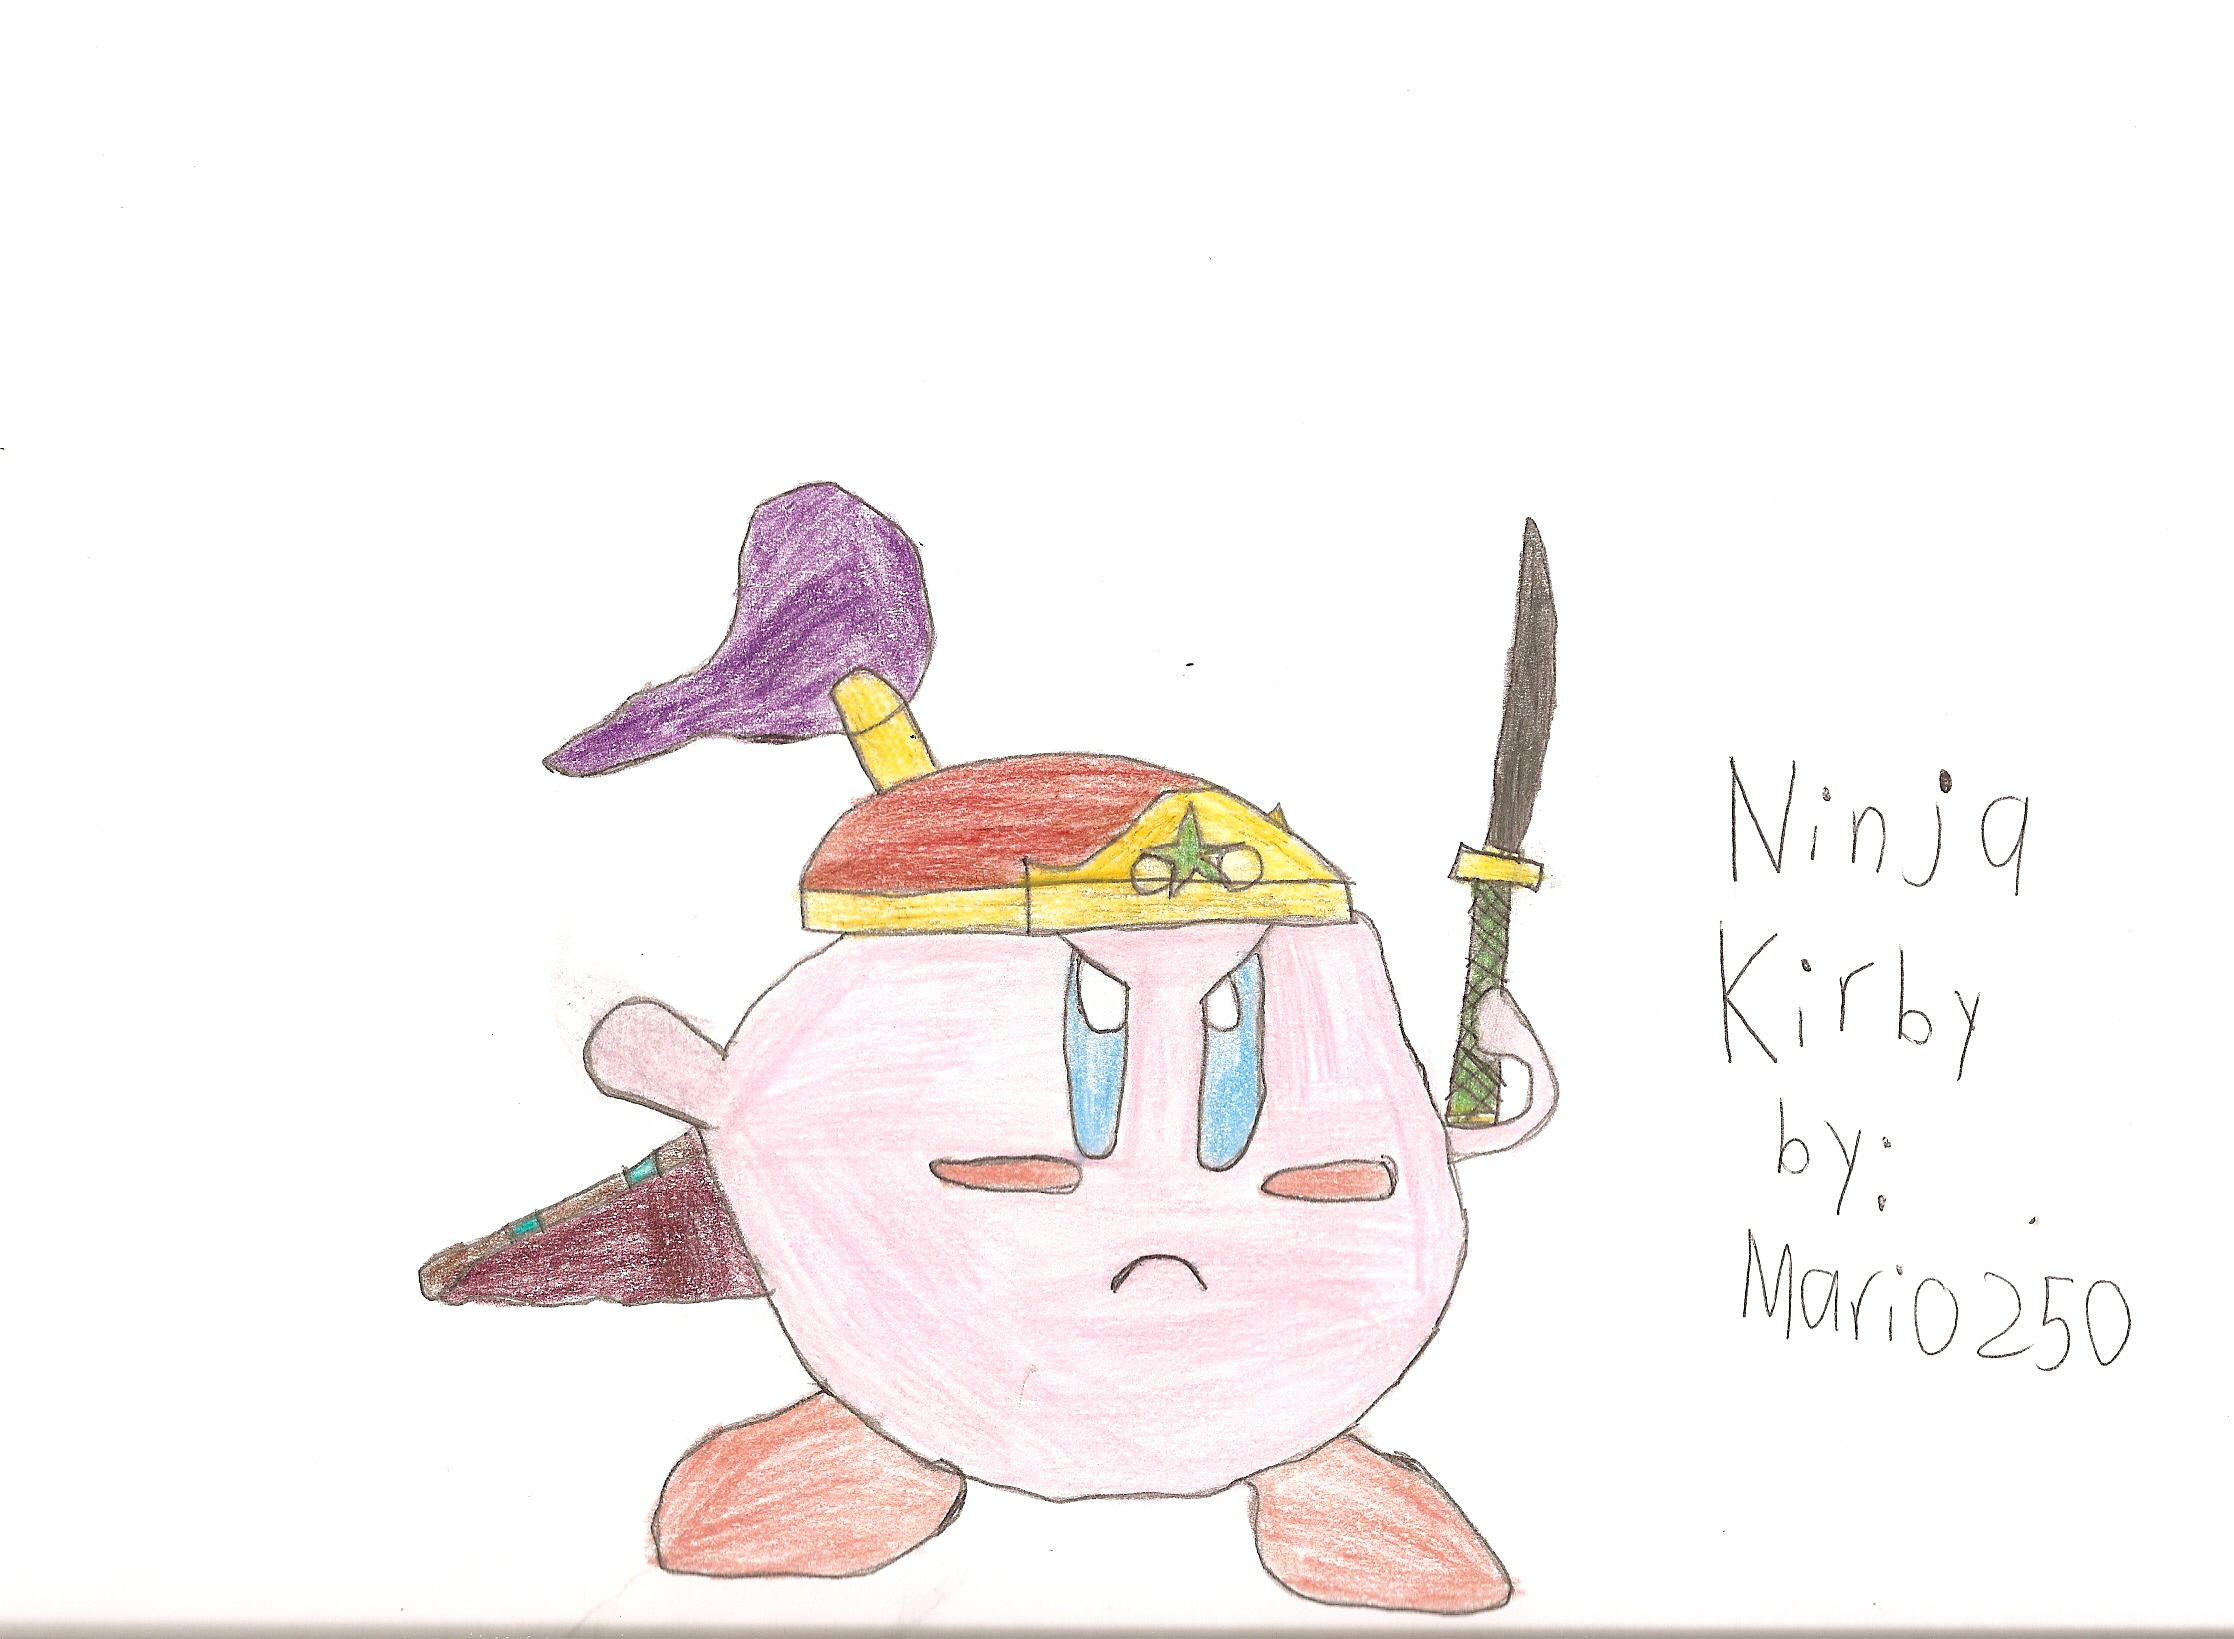 Ninja Kirby by Mario250